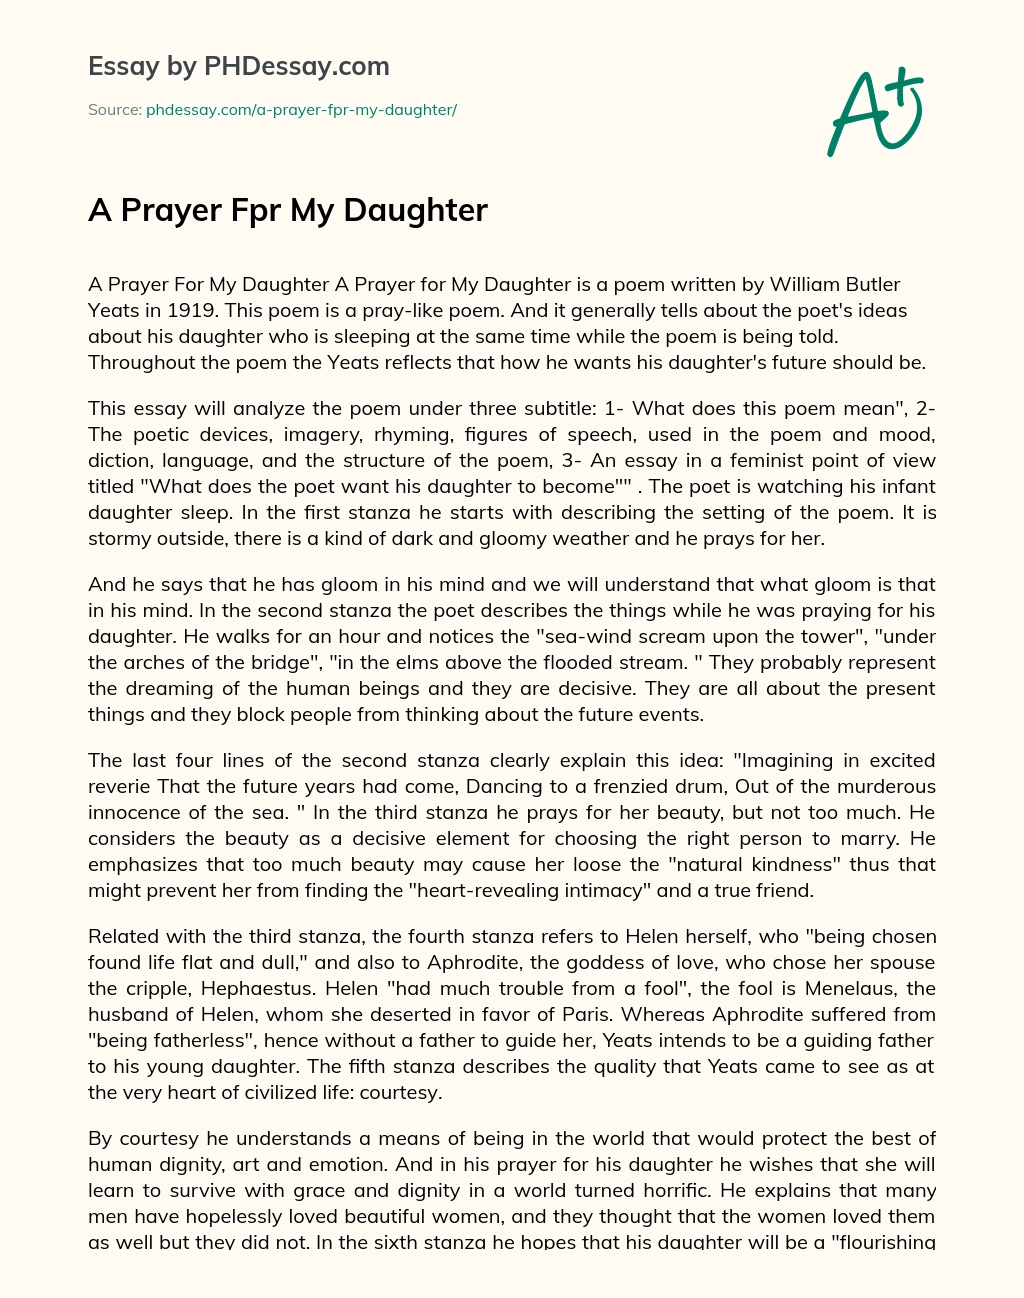 A Prayer Fpr My Daughter essay